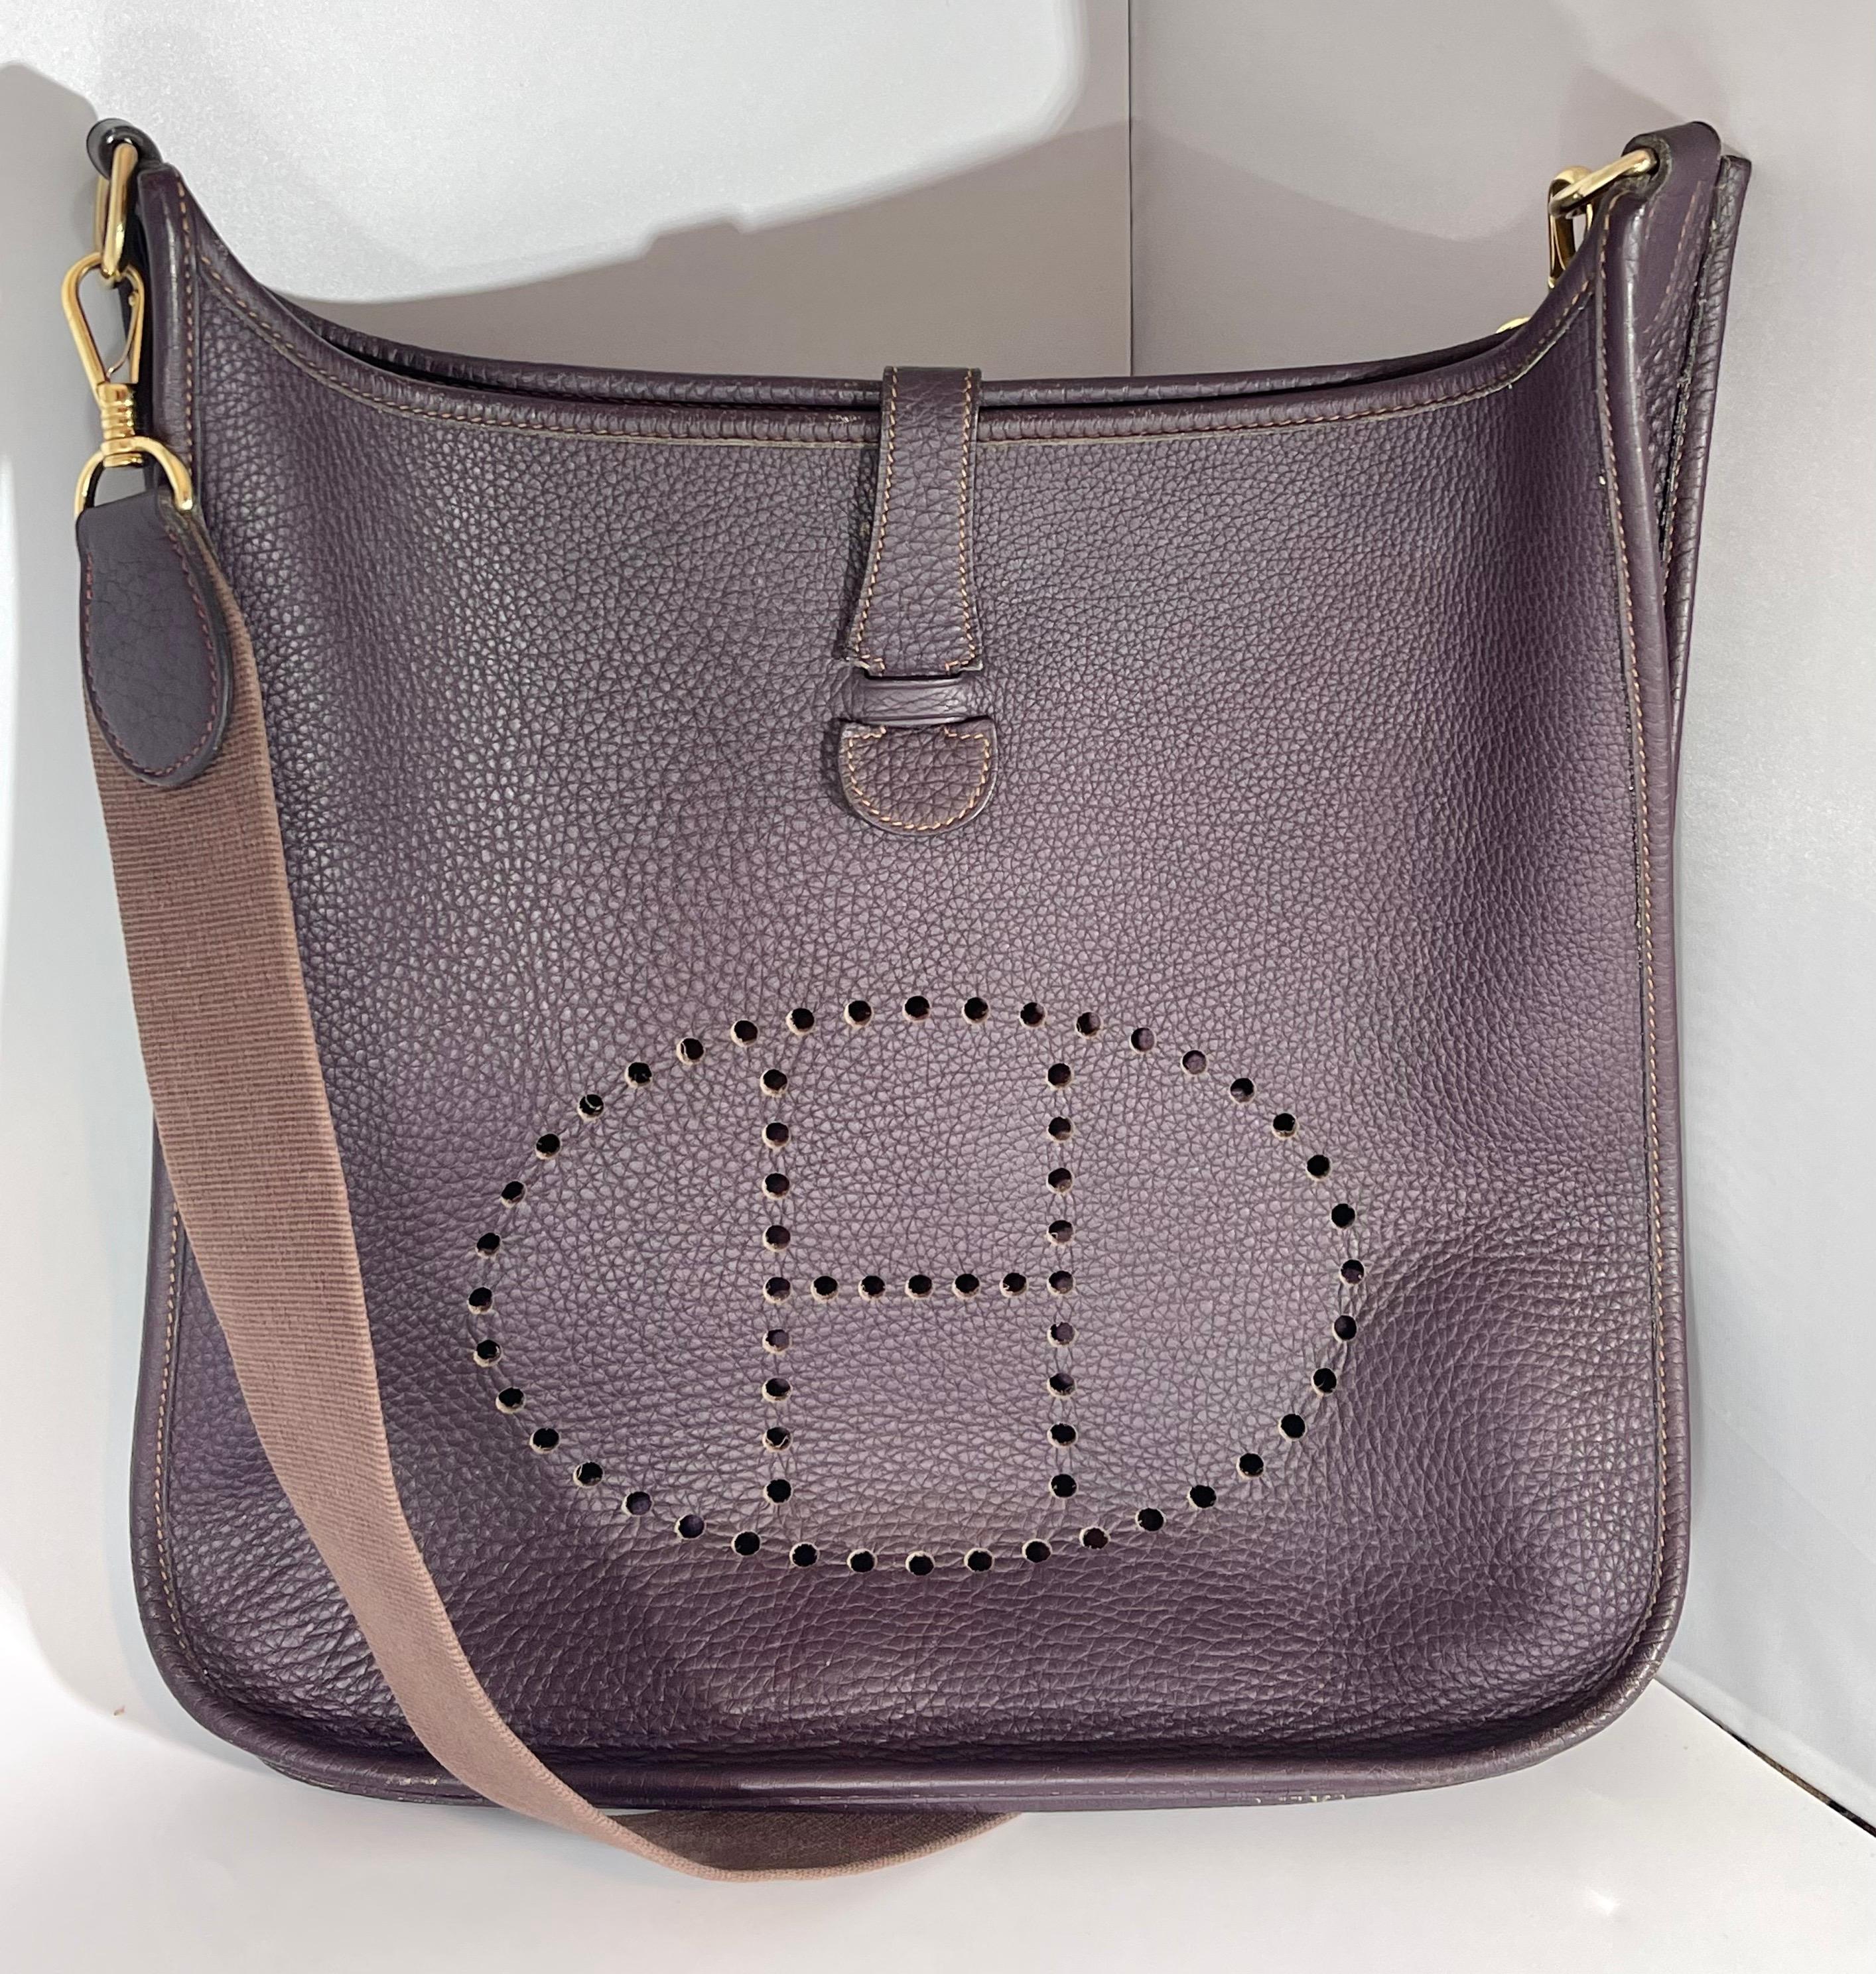 Hermès Evelyne Pm Dark Brown / Chocolate Leather Cross Body Bag Like New For Sale 4